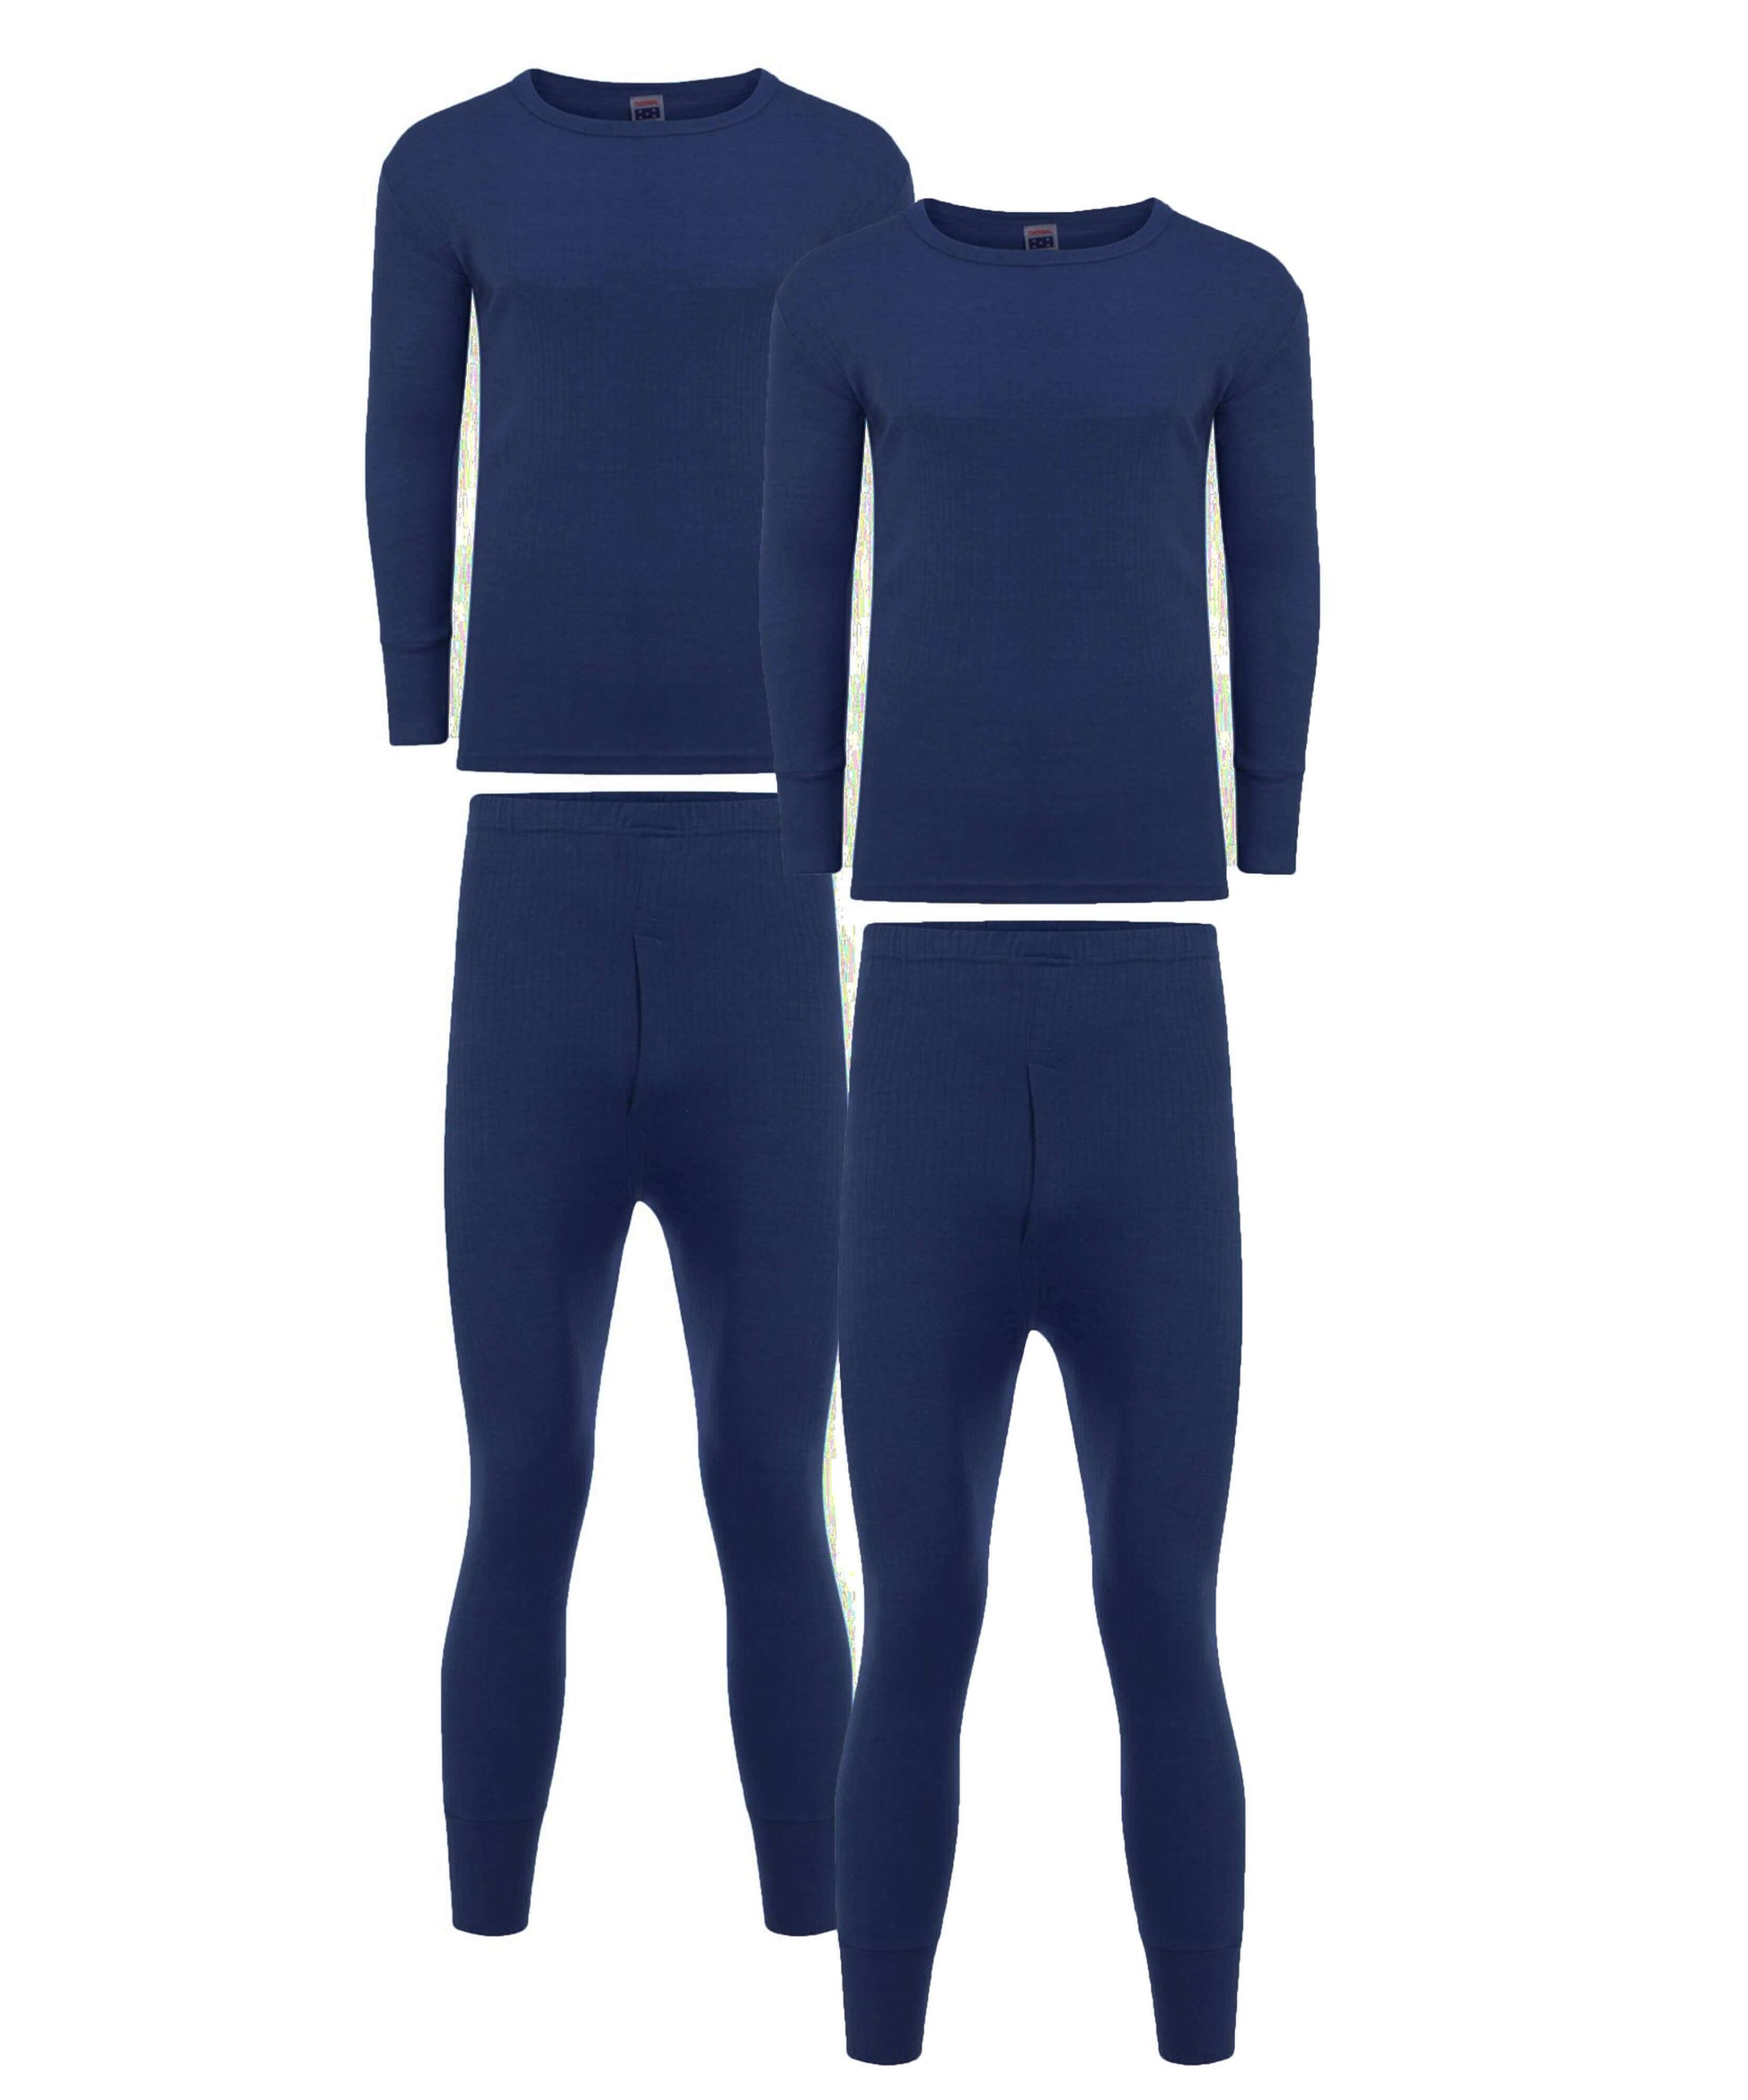 Lightweight Performance Long John Thermal Underwear - Black, Navy Blue 